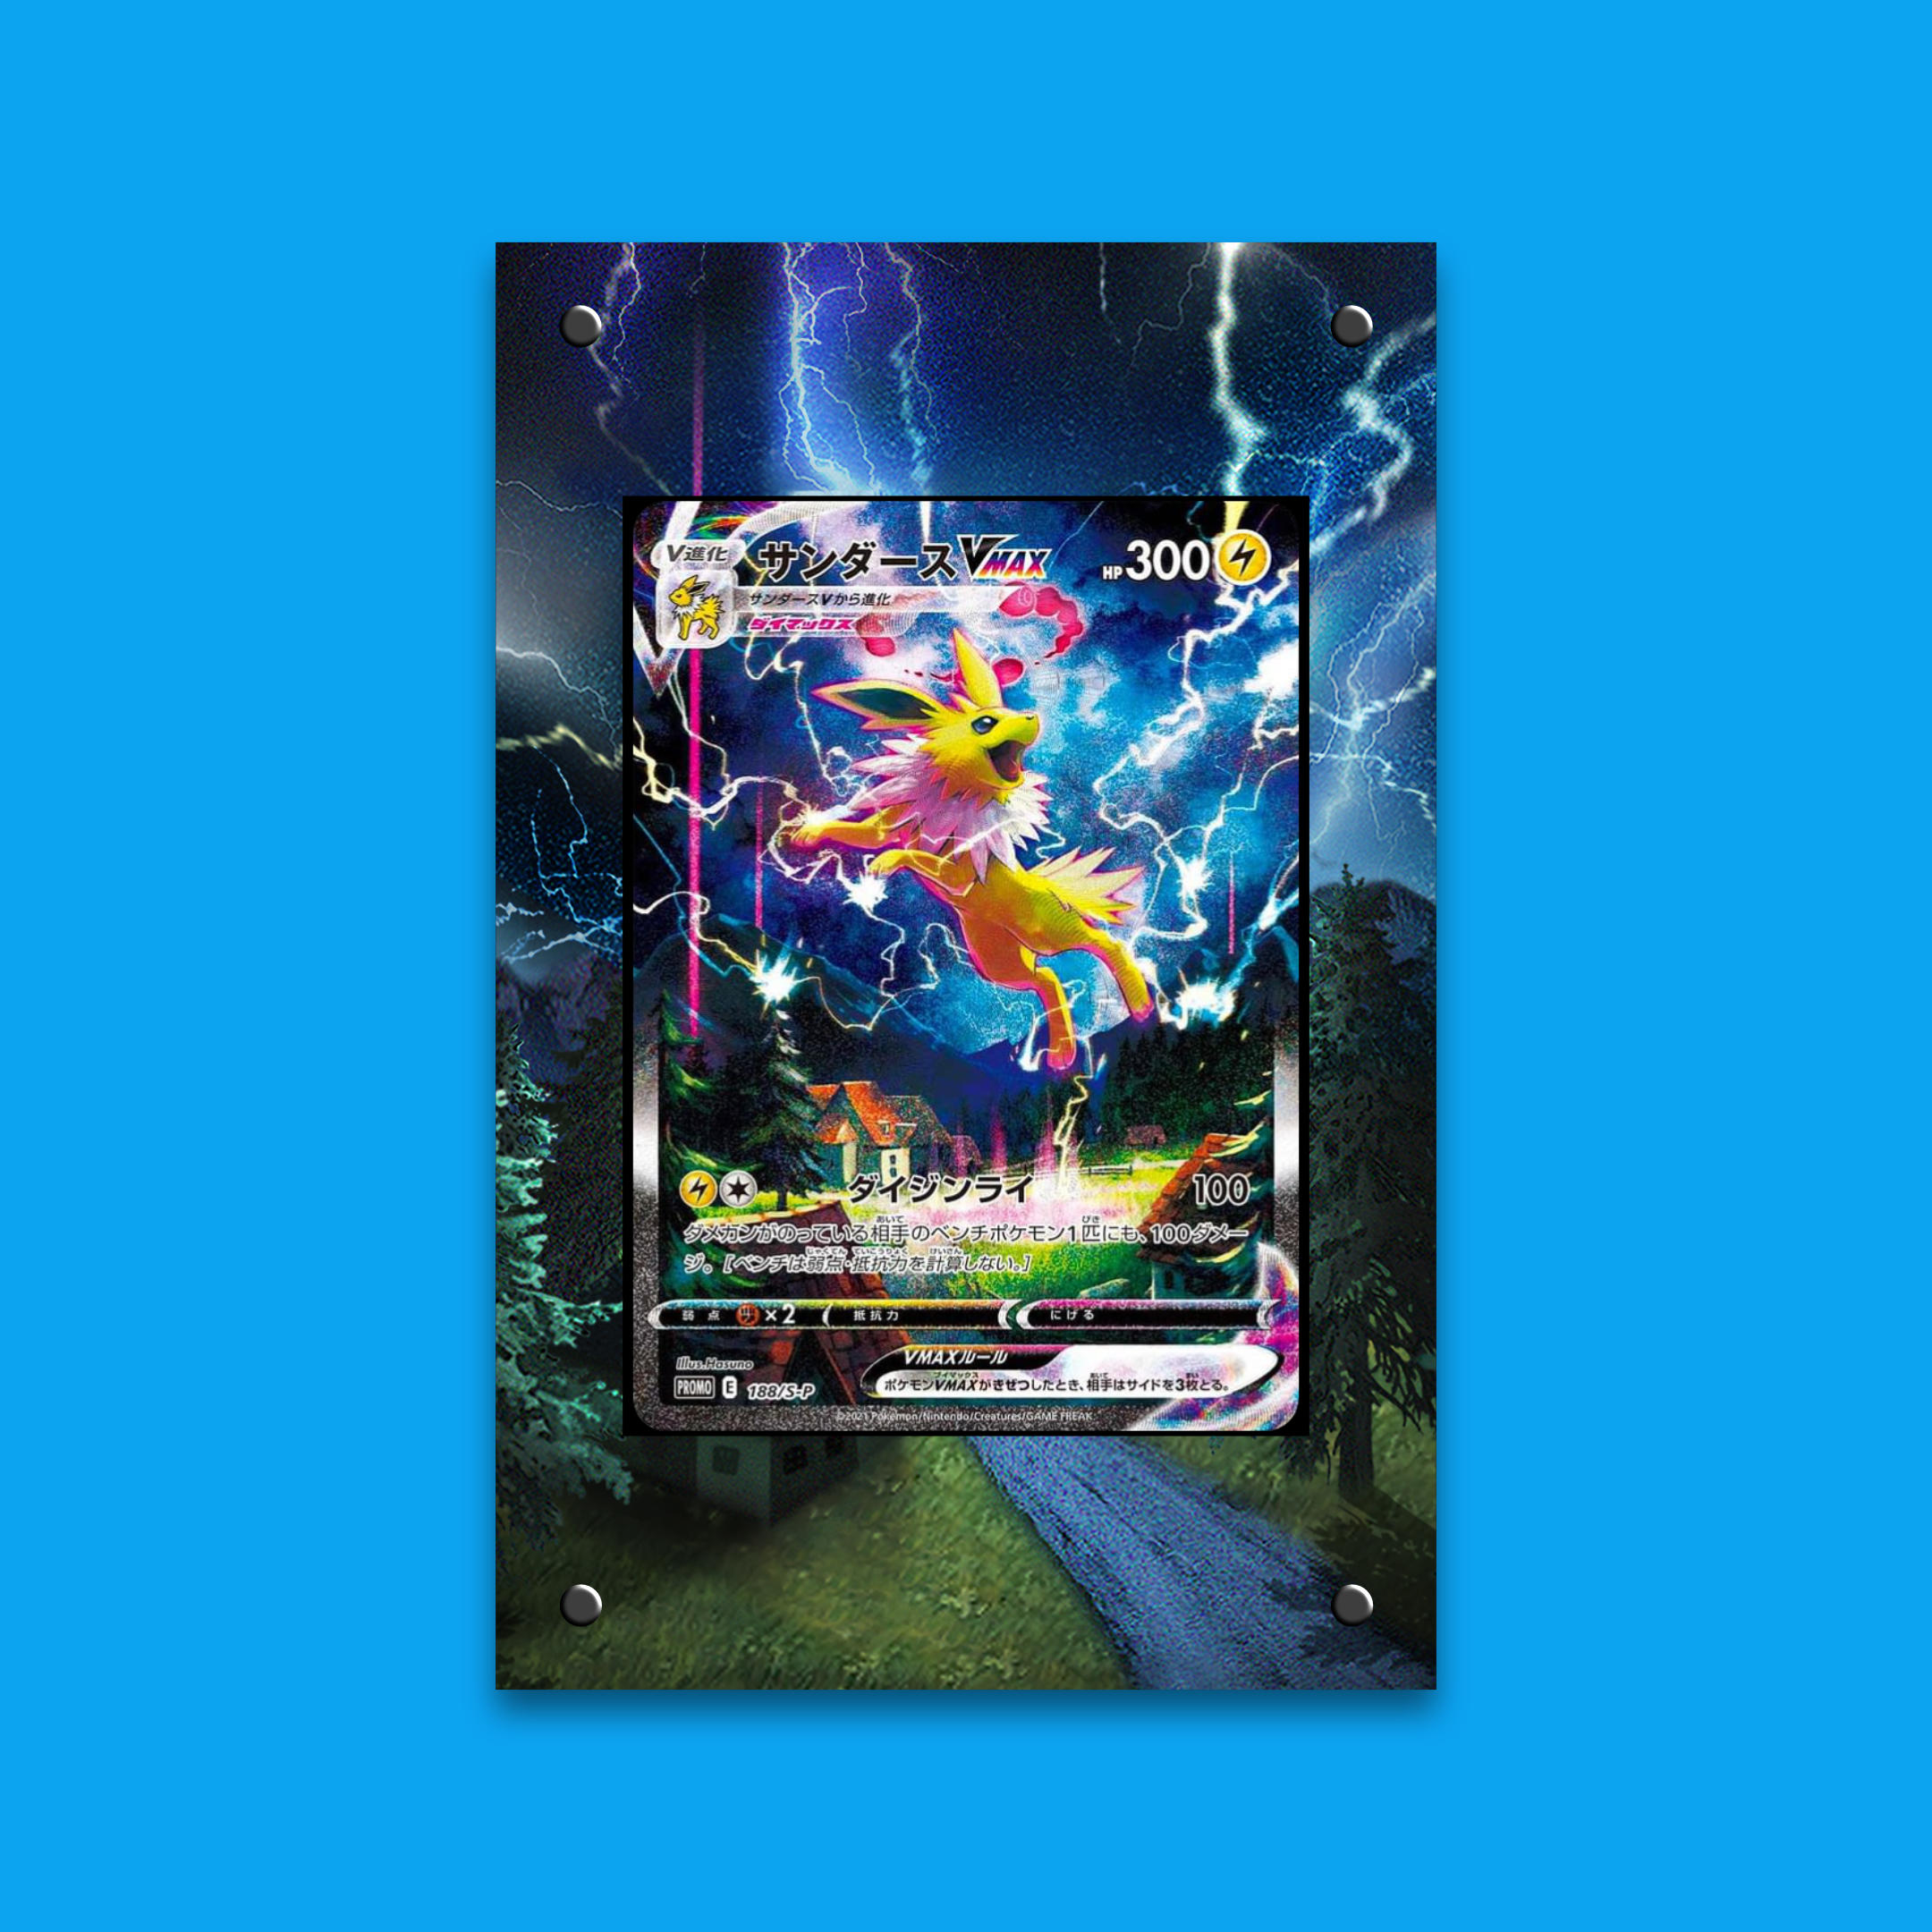 Pokémon Card Case - Aerodactyl V (Alternate Art) - Pixel Pressed